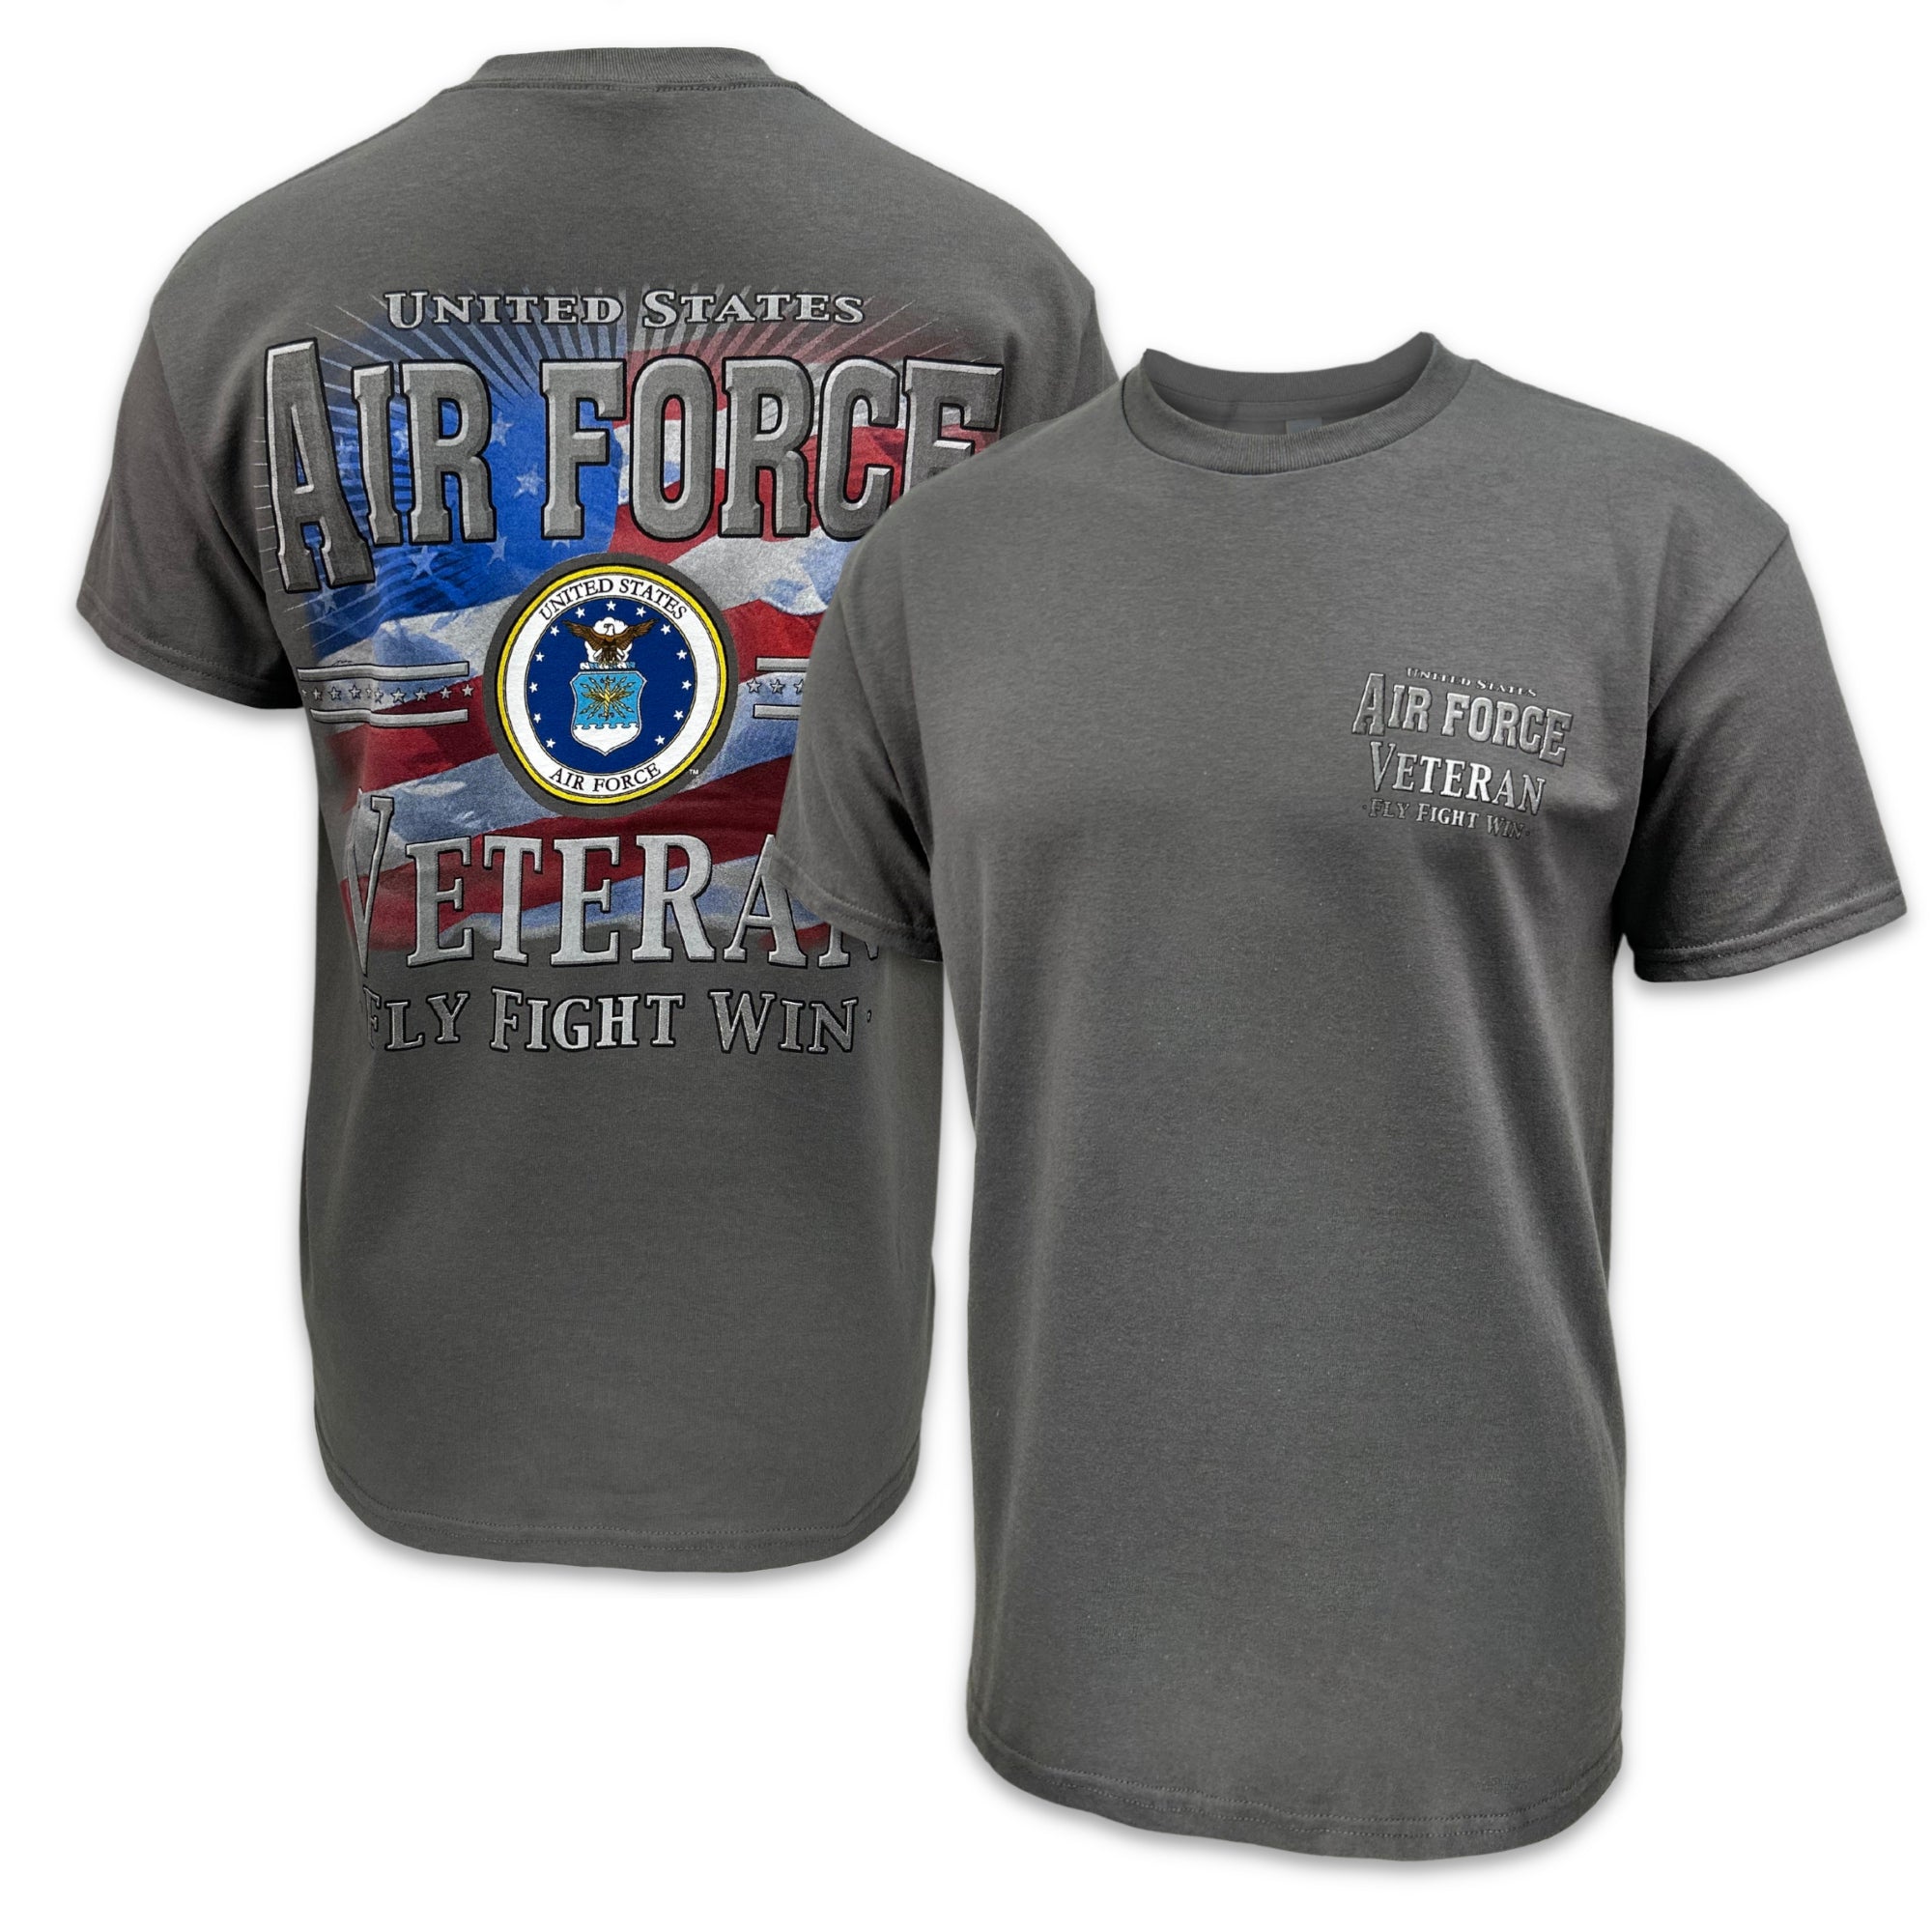 Air Force Veteran Star Band T-Shirt (Charcoal)